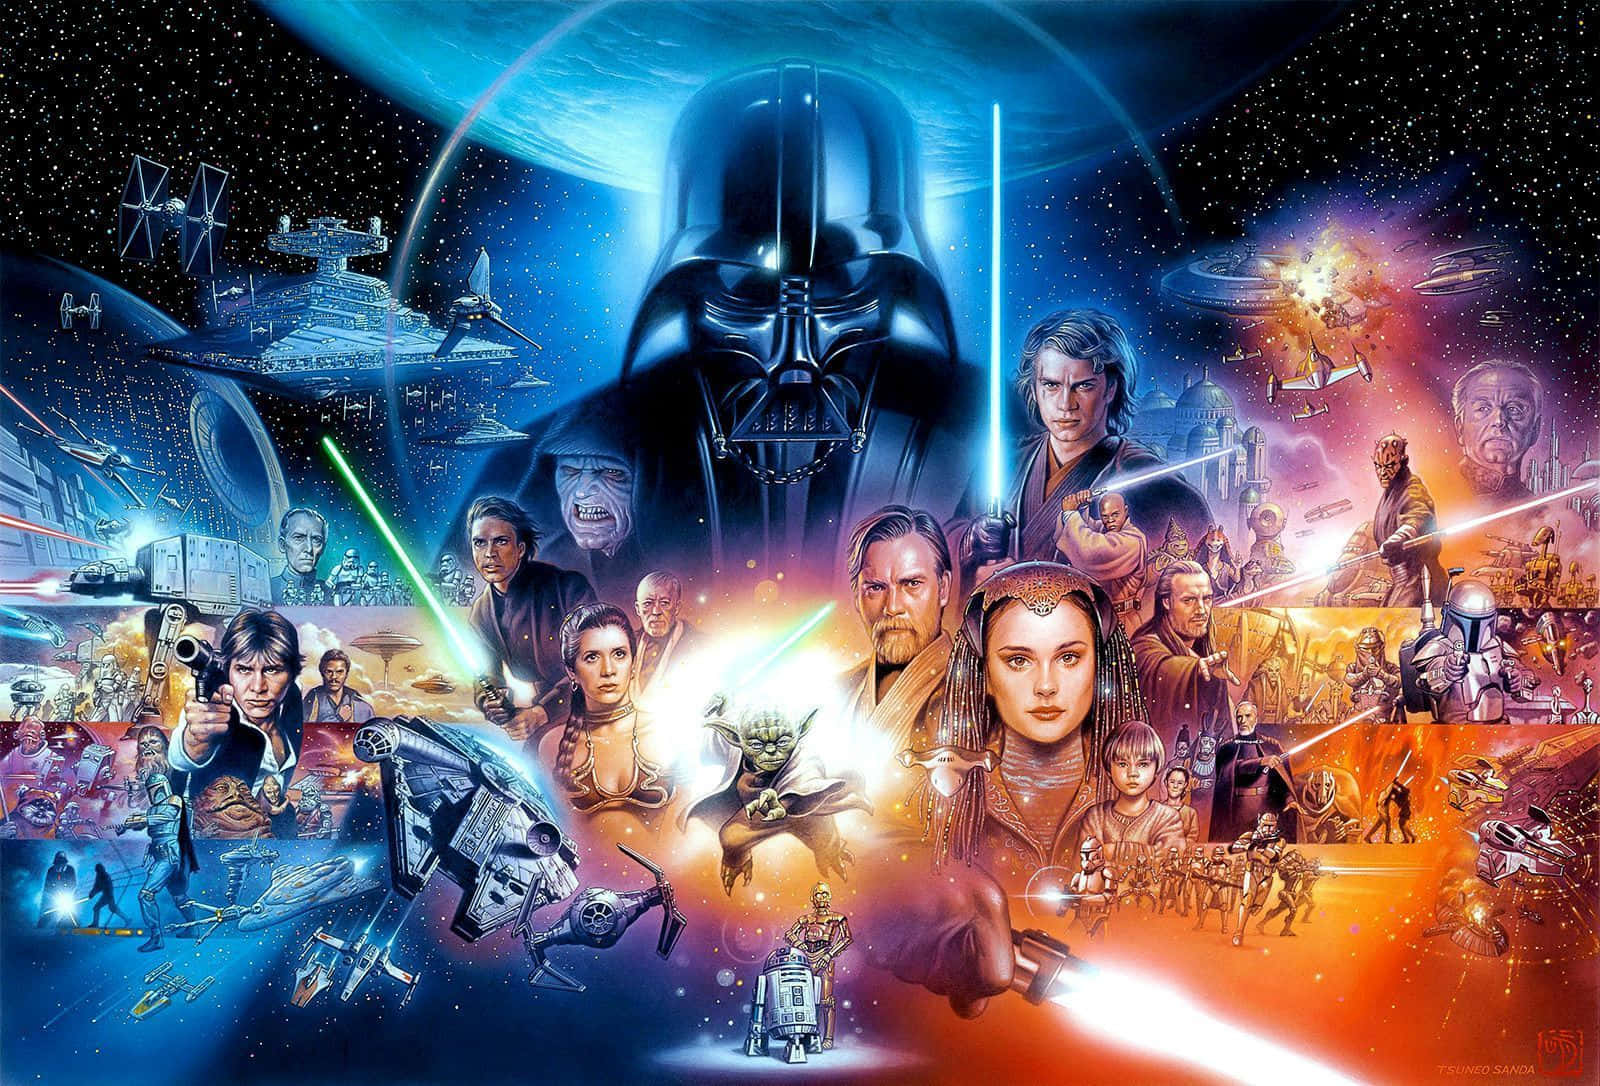 Free Star Wars Wallpaper Downloads, [500+] Star Wars Wallpapers for FREE |  